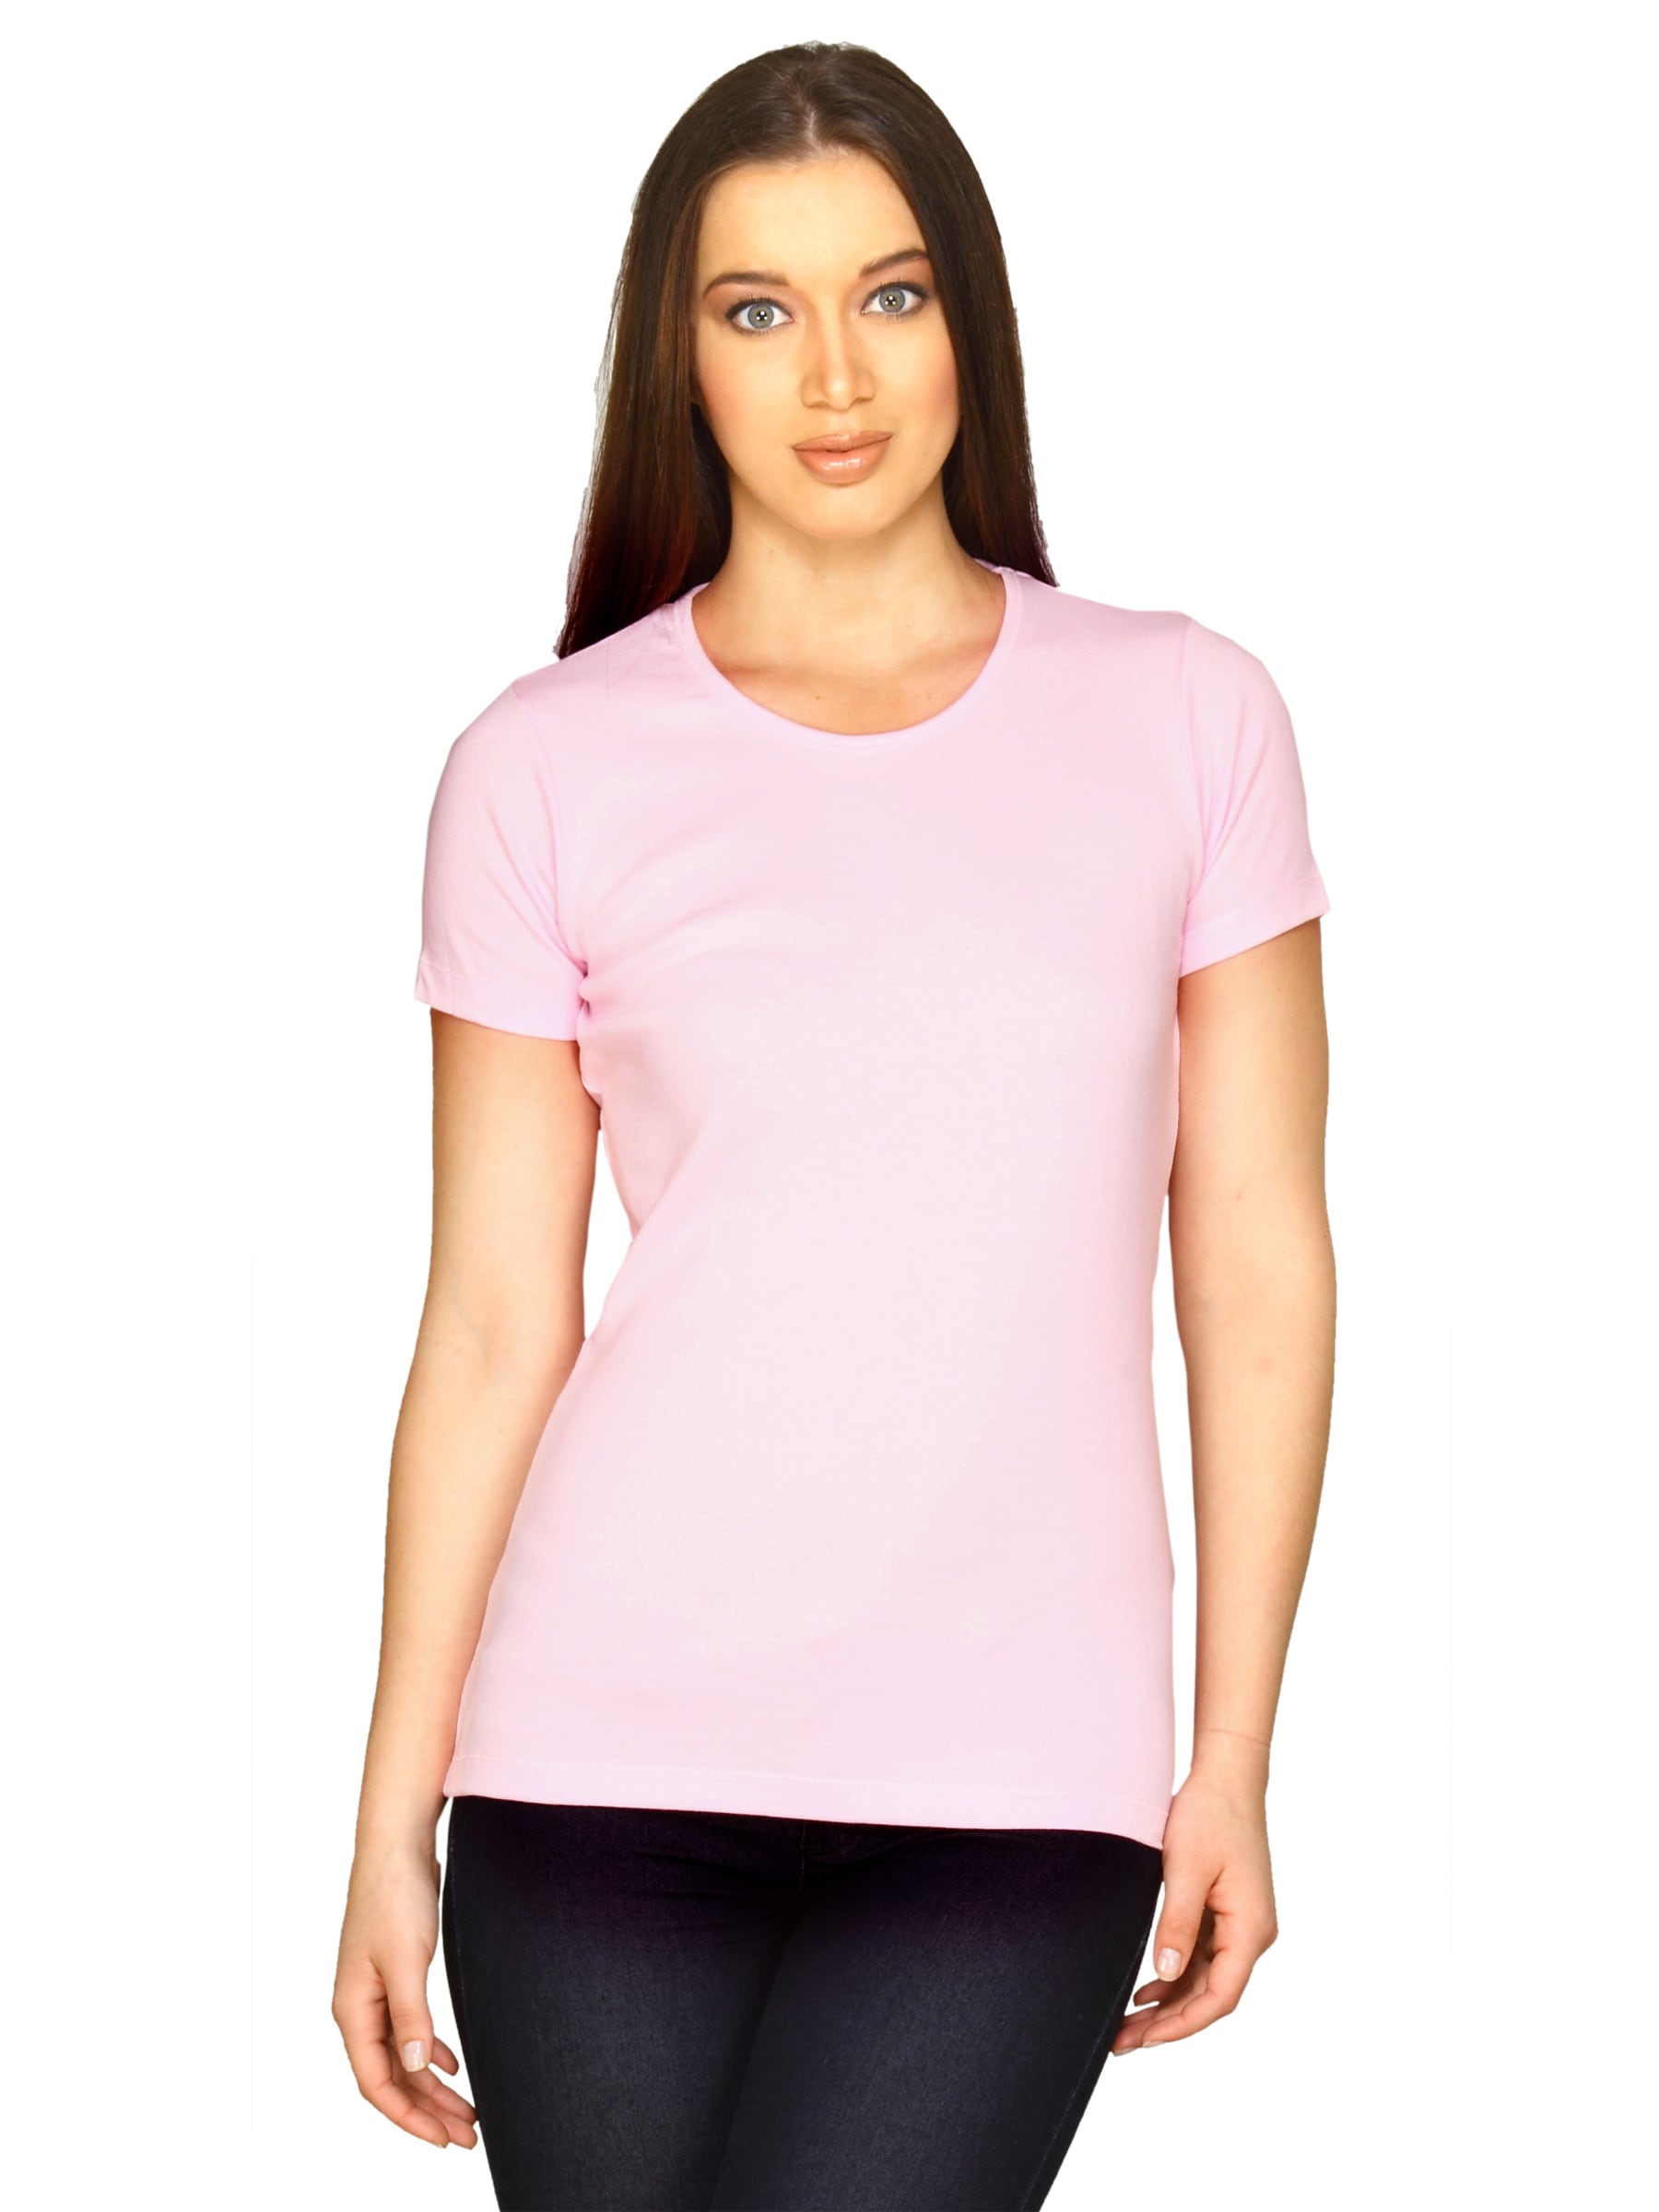 Domyos Women Style Pink T-shirt